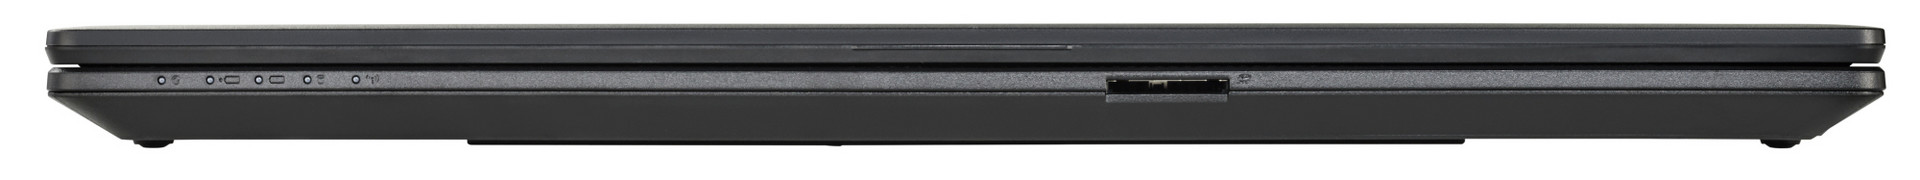 Fujitsu LifeBook E558 (i5-8250U, SSD, FHD) Laptop Review ...